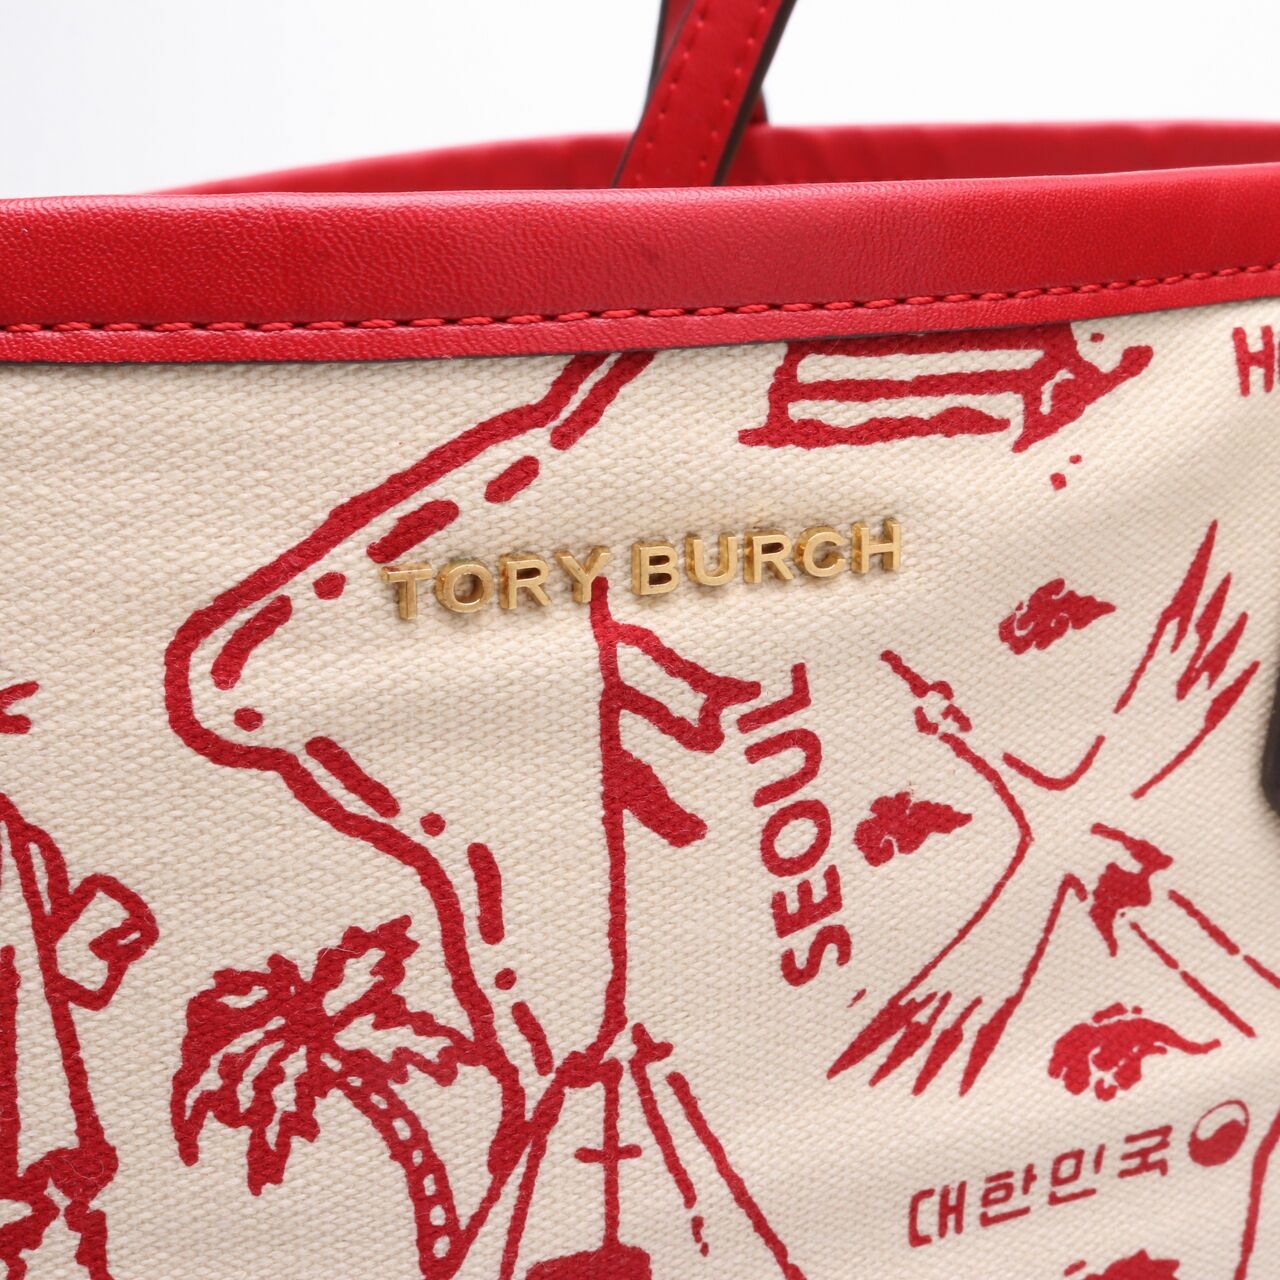 Tory Burch Red & Broken White Tote Bag